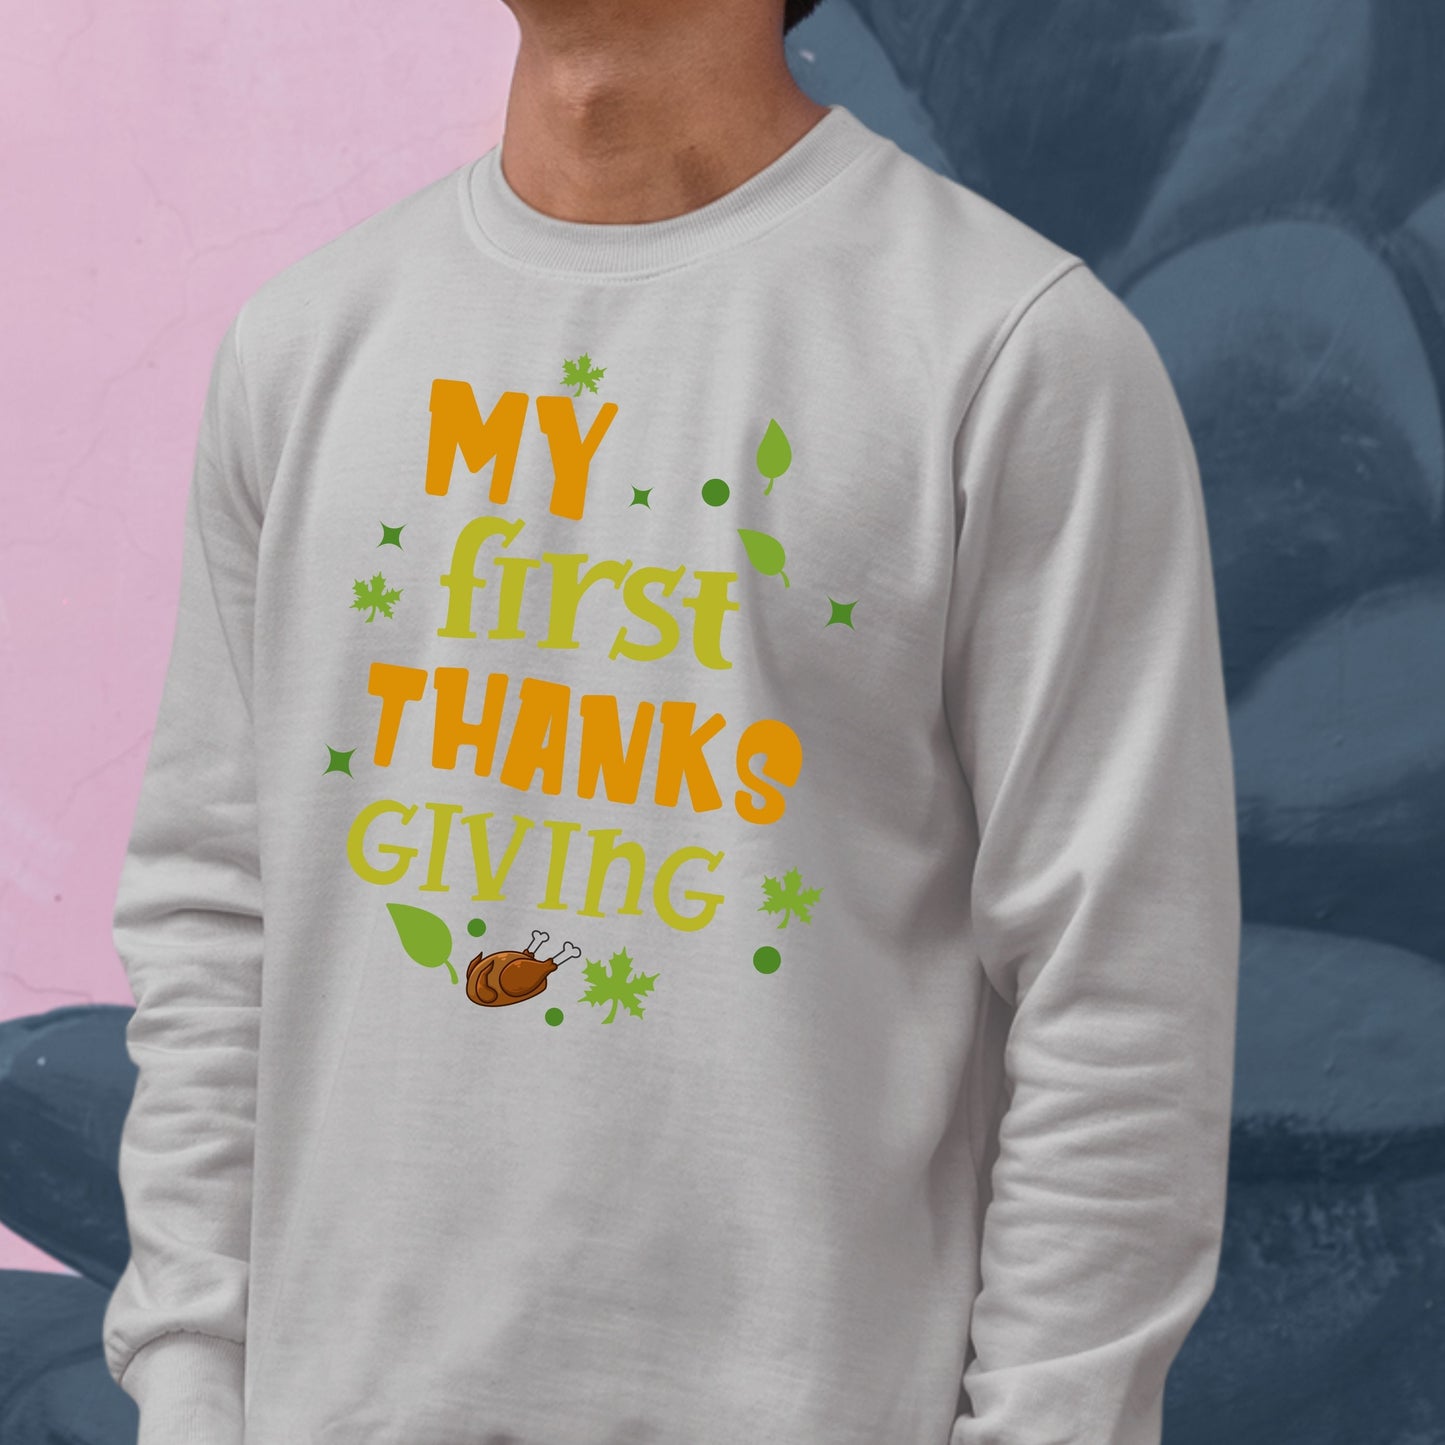 First Thanks Giving Sweatshirt, Thanksgiving Sweatshirt, Thanksgiving Sweater for Kids, Cute Thanksgiving Sweatshirt, Funny Thanksgiving